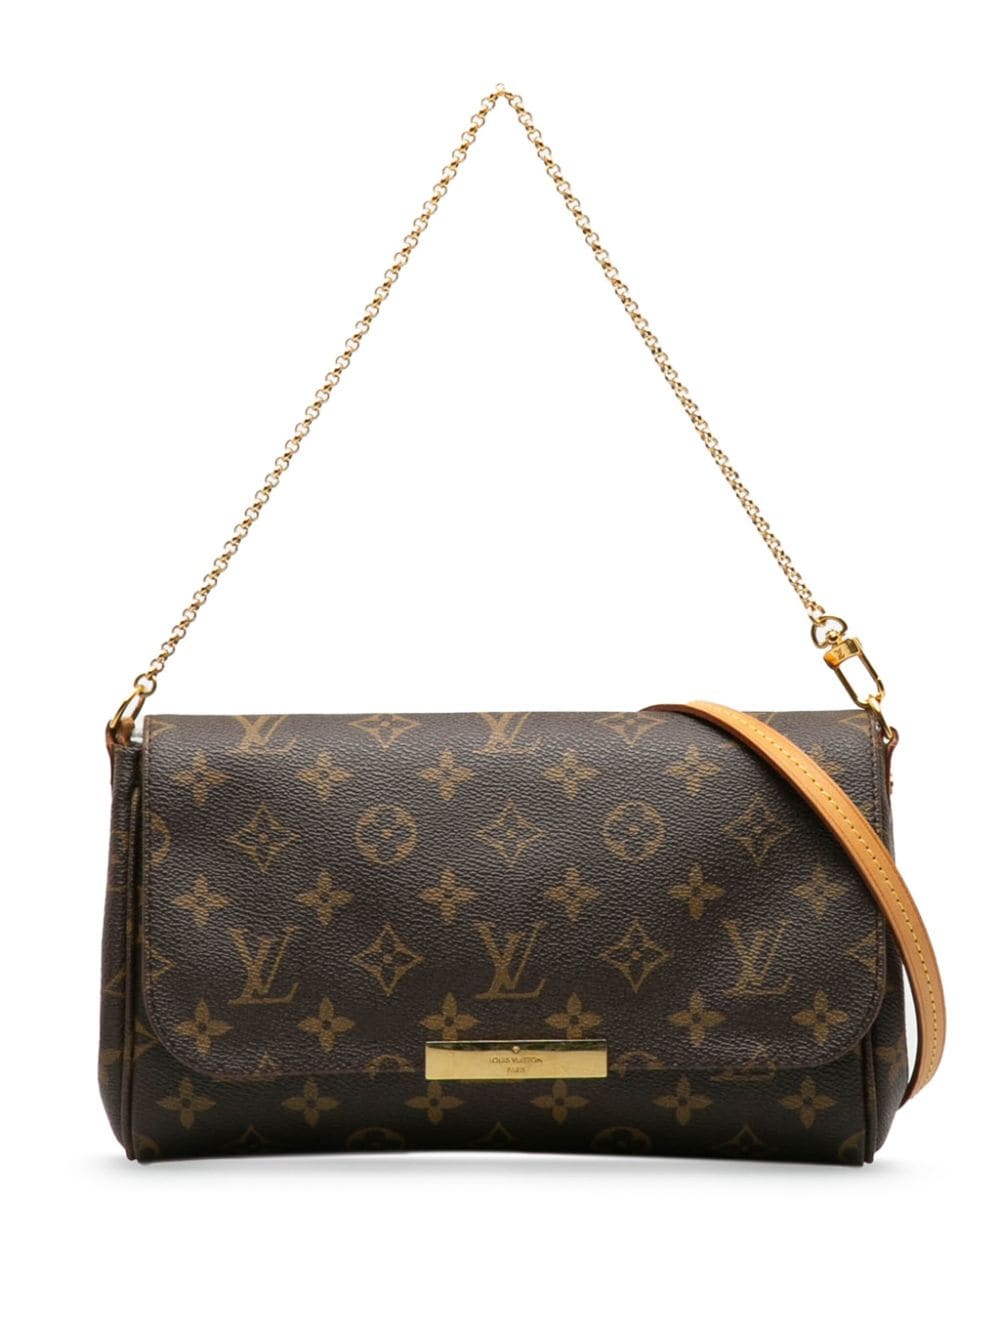 Pre-owned Louis Vuitton 2013 Favorite Pm Shoulder Bag In Brown